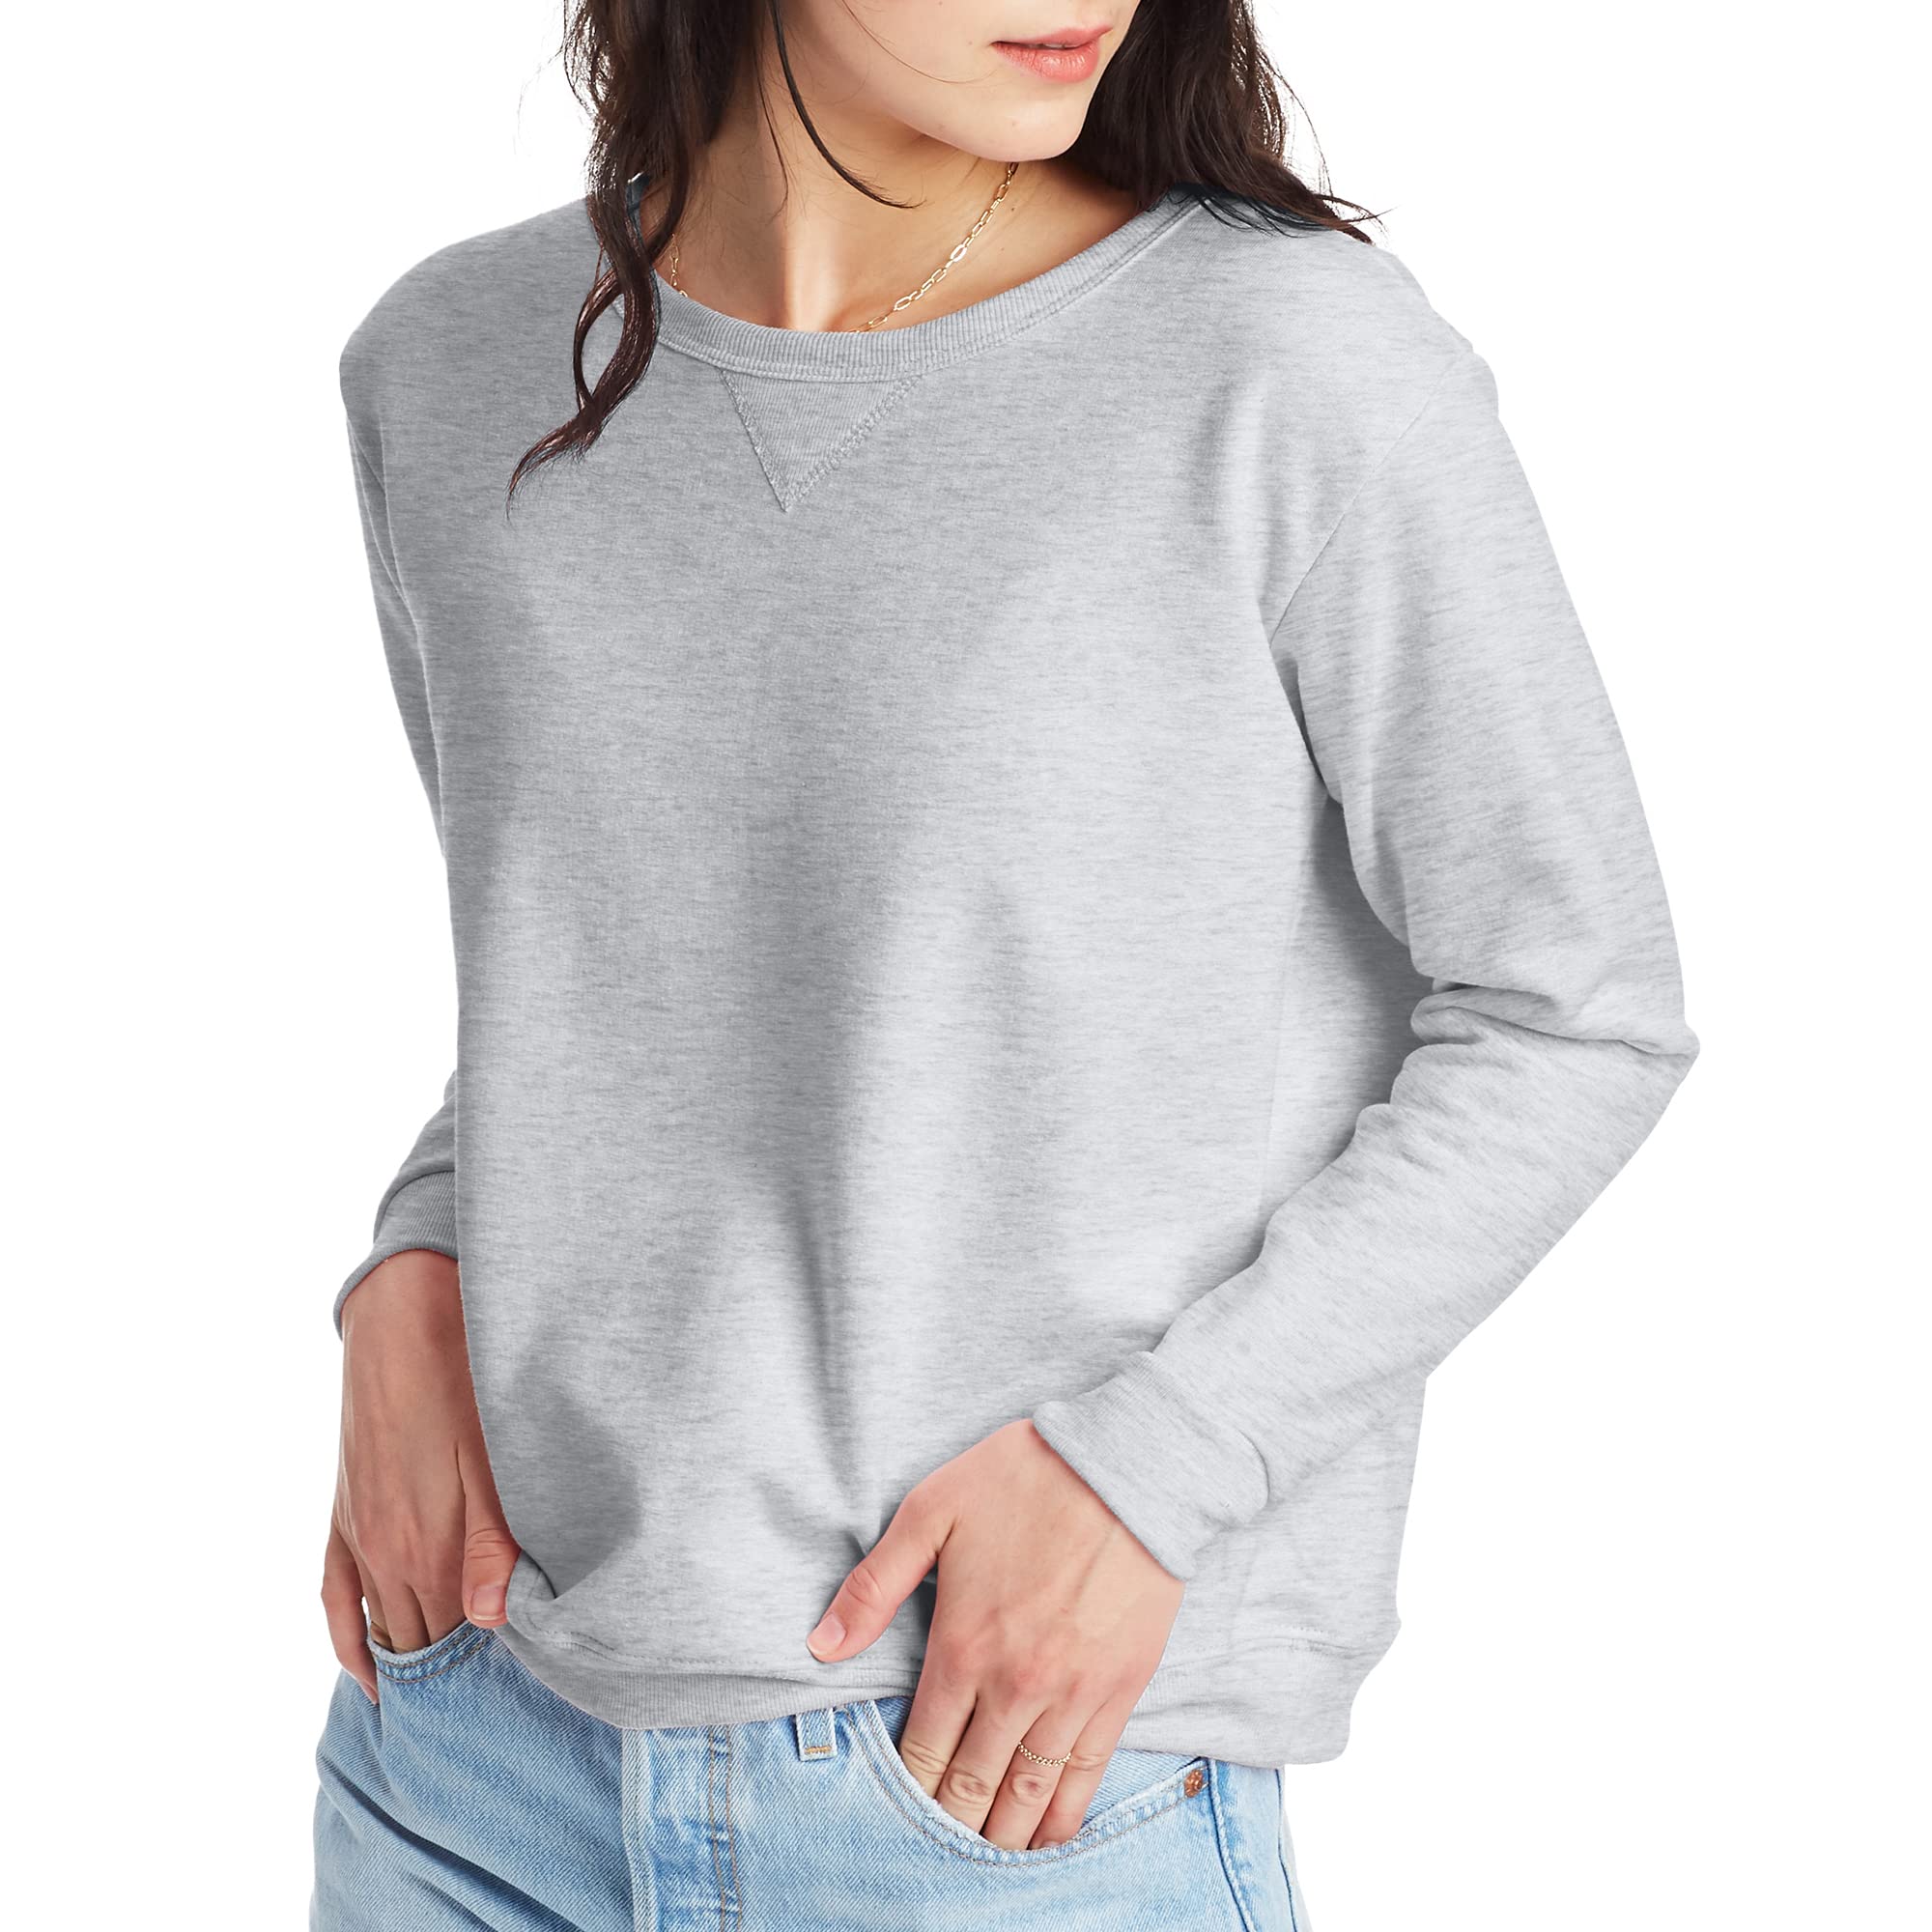 Hanes Women's Crewneck Fleece Pullover Sweatshirt (Various Colors) $8 + Free Shipping w/ Prime or on $25+